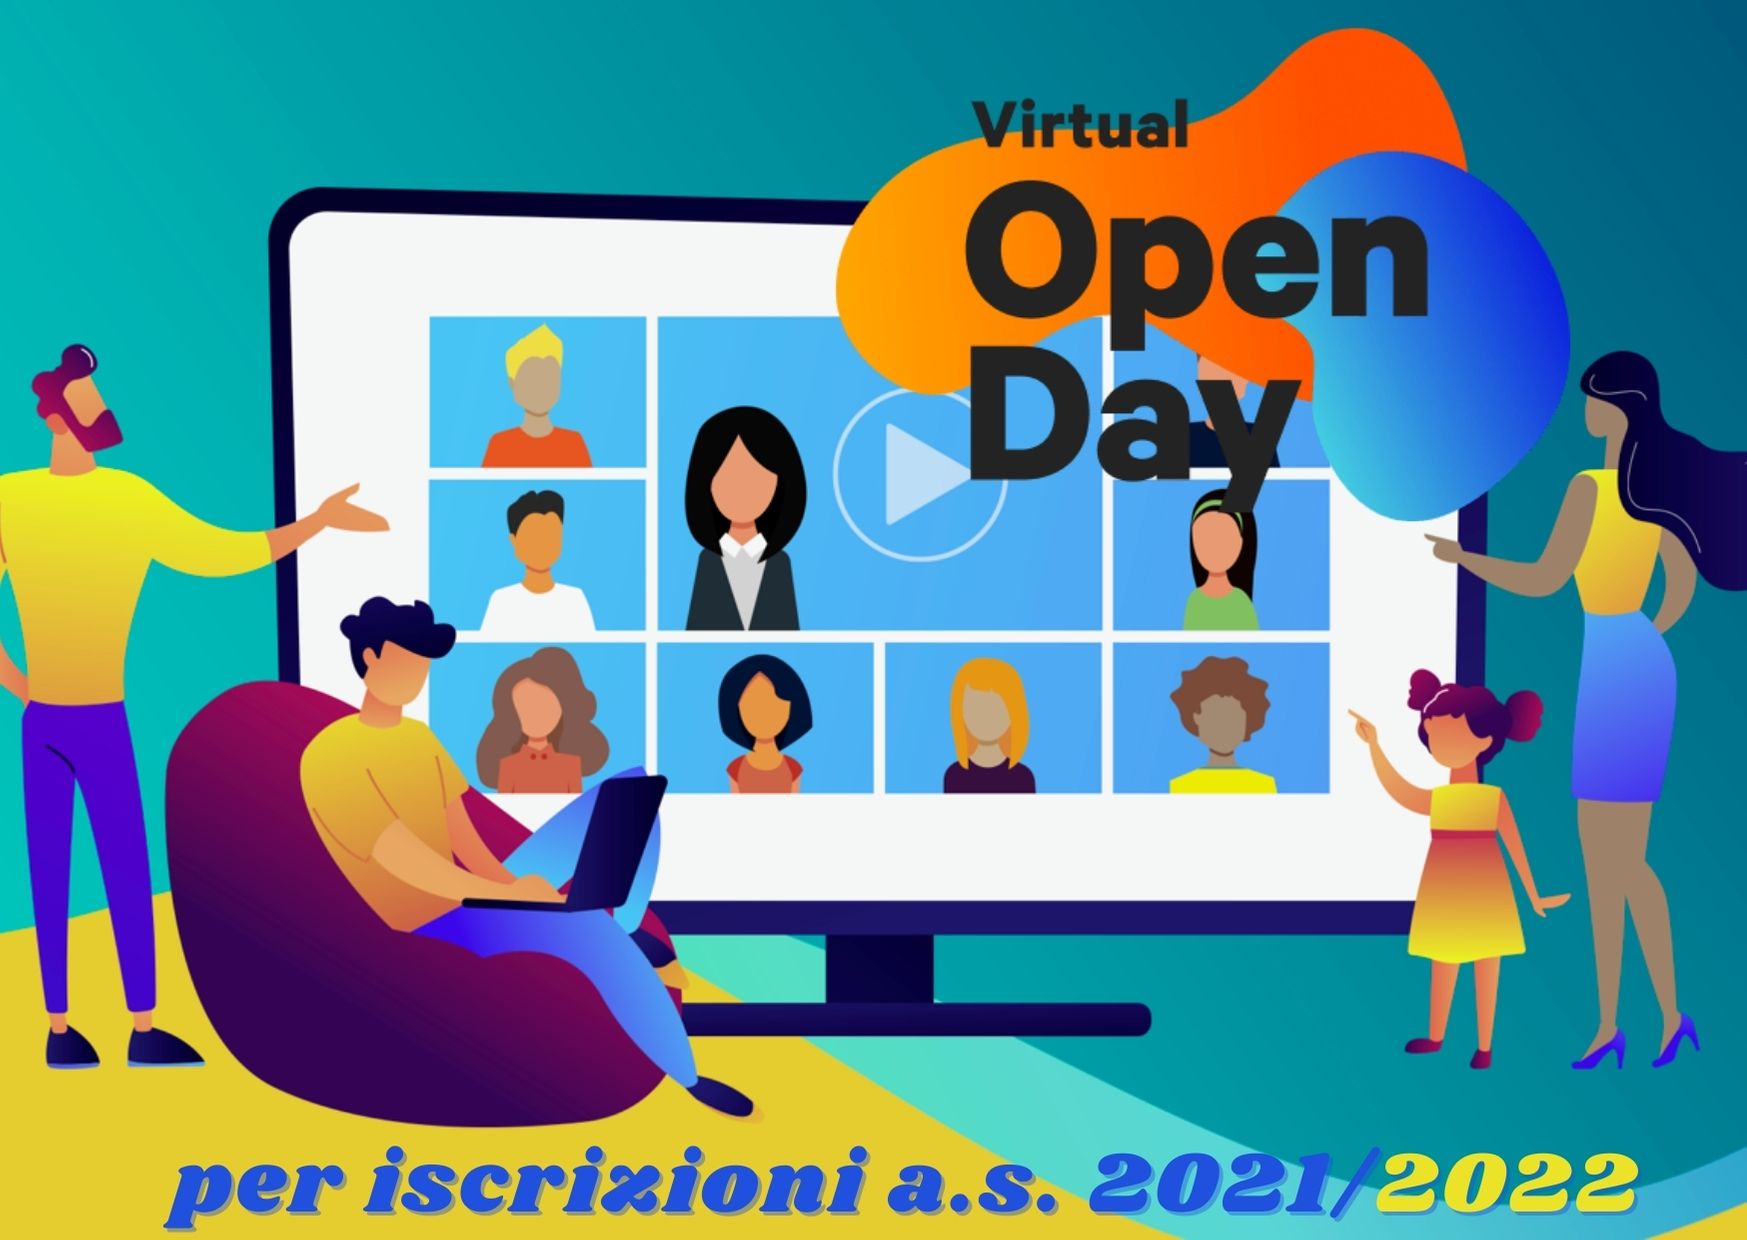 Virtual open day